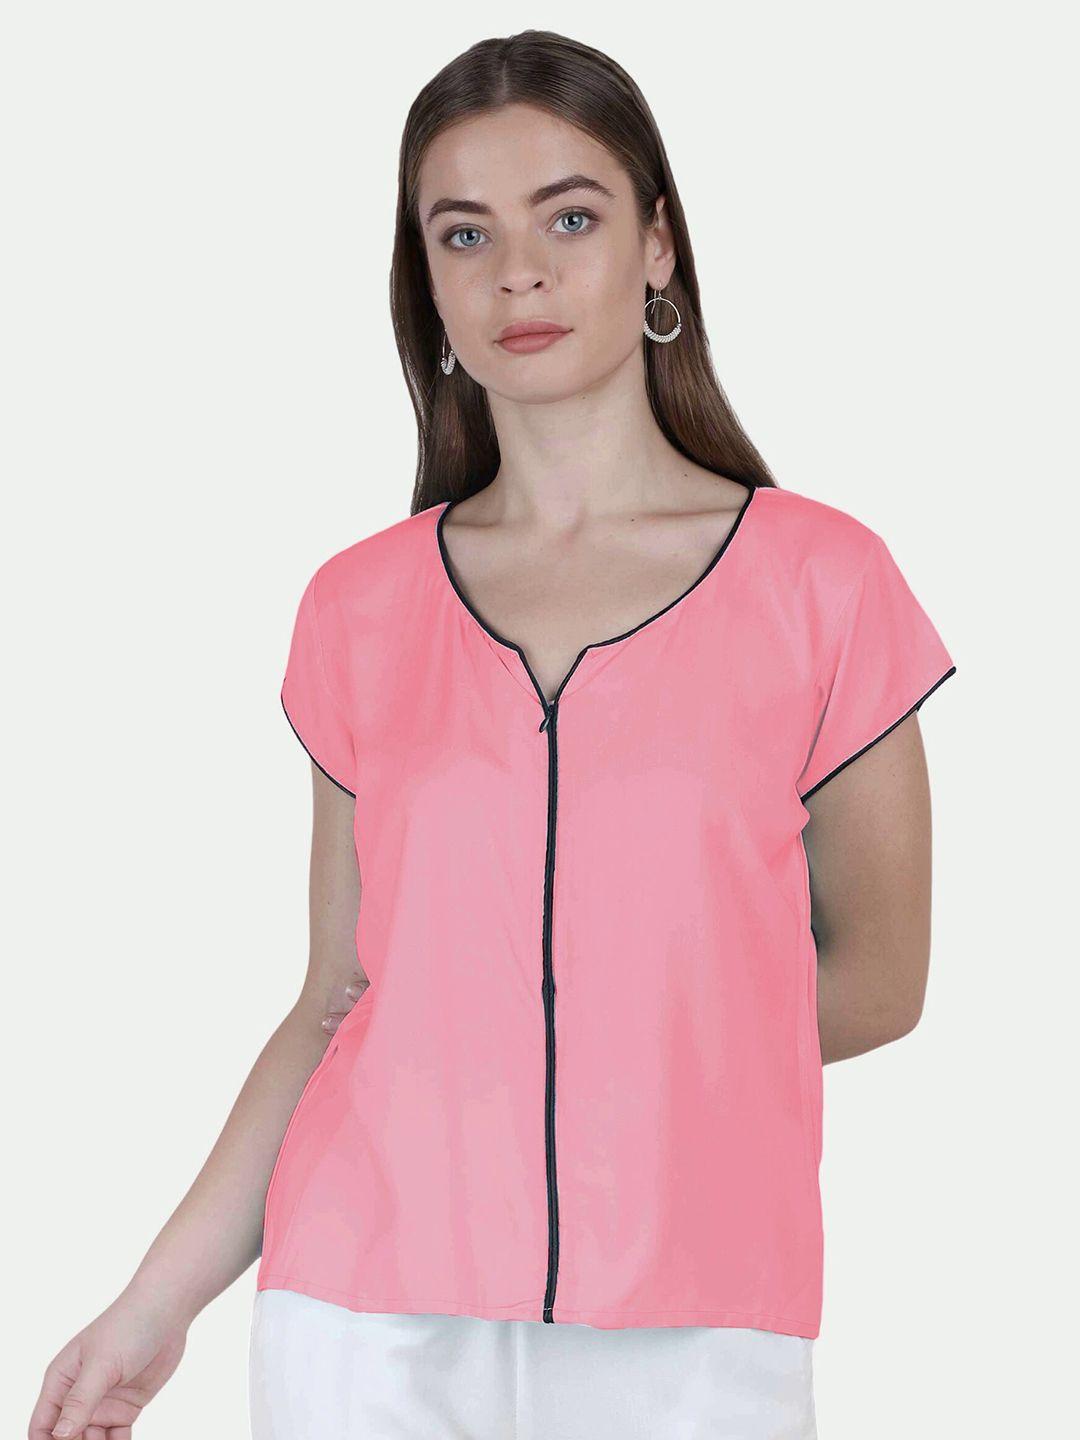 patrorna-women-pink-&-black-top